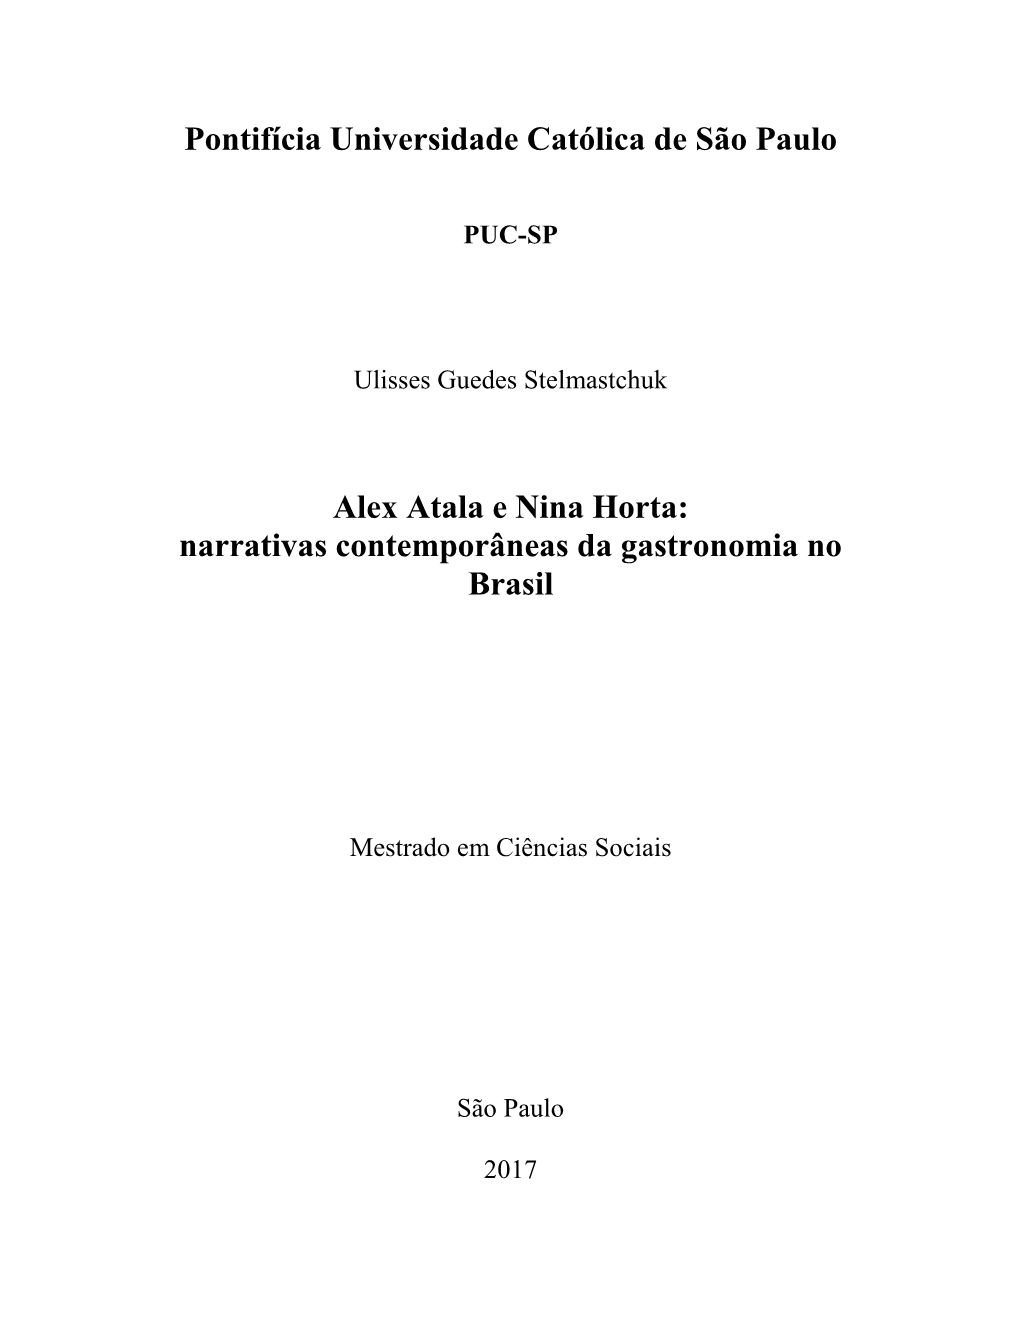 Alex Atala E Nina Horta: Narrativas Contemporâneas Da Gastronomia No Brasil